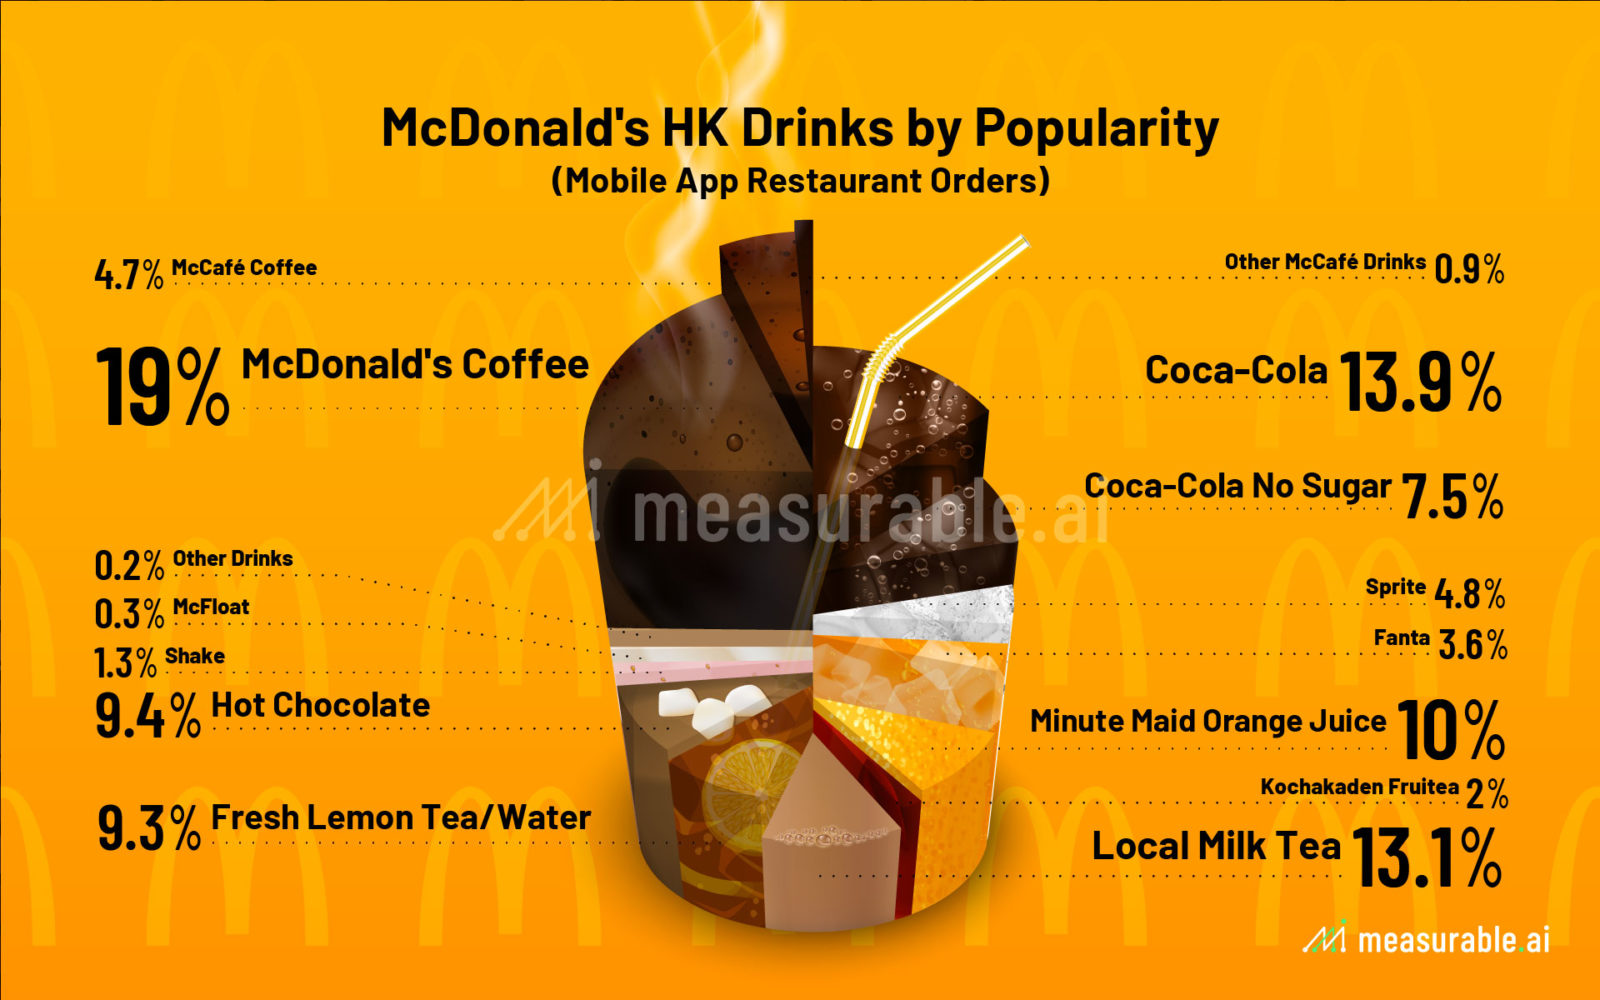 McDonald's HK Drinks by Popularity